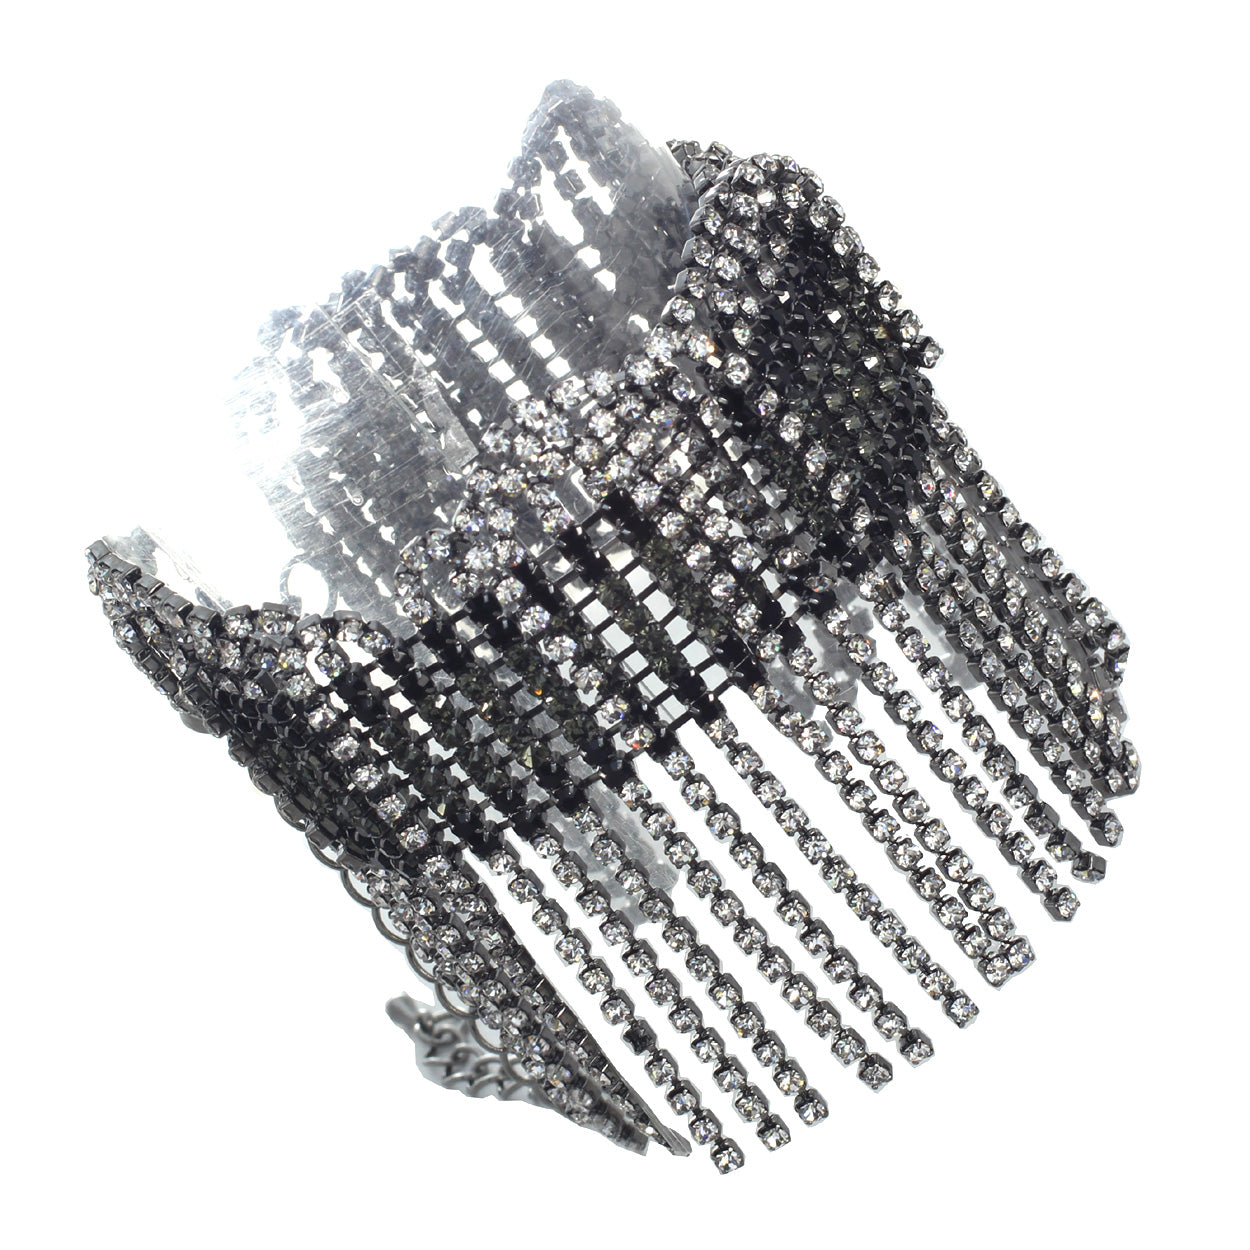 Unique Statement 10 Row Black Crystal With Rhinestone Fringe Hematite Tone Adjustable Bracelet, 7"+1.5" Extender